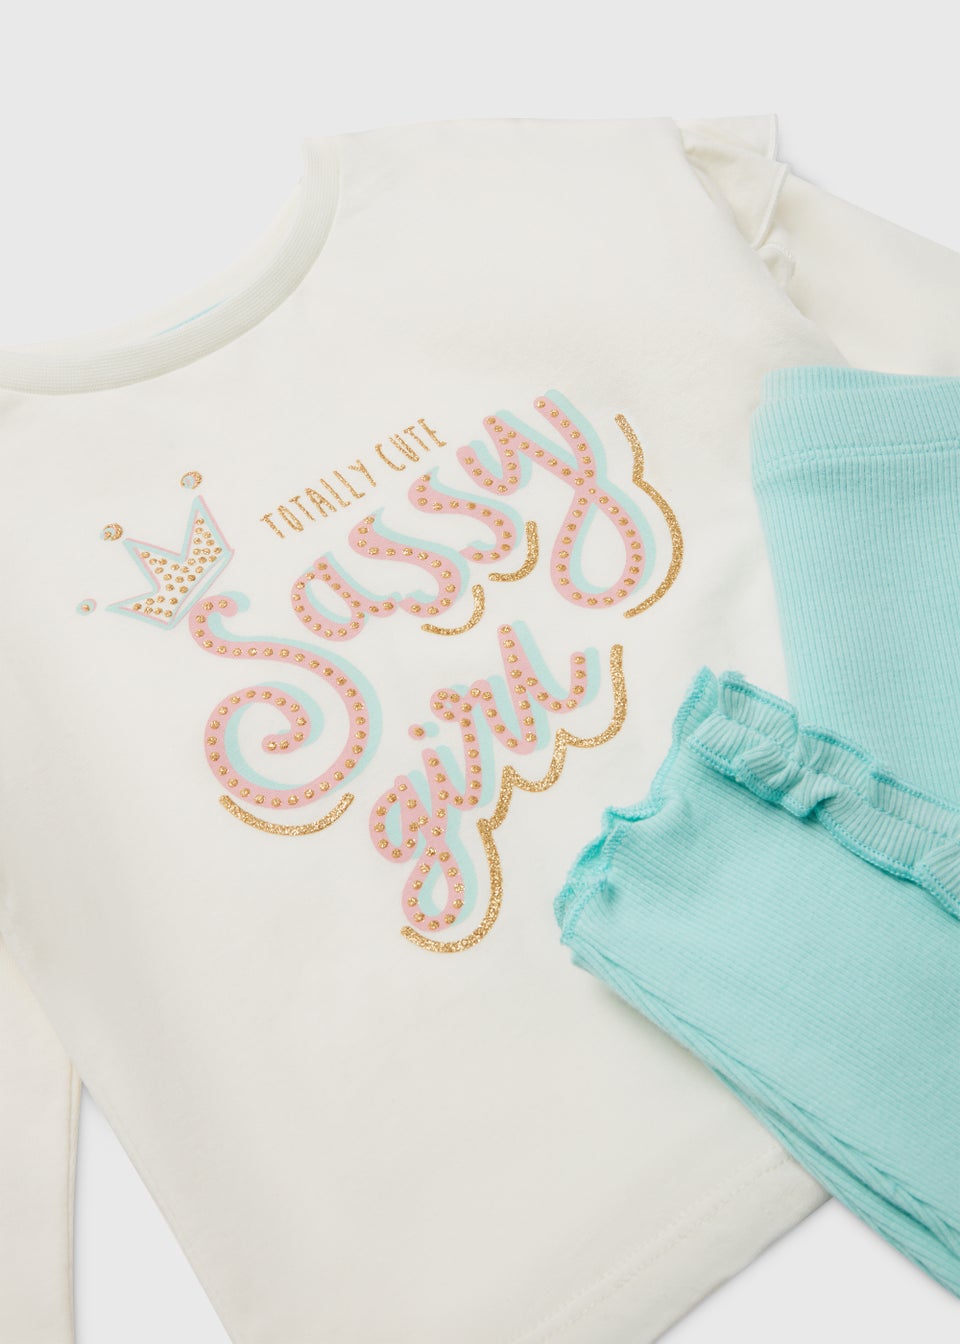 Girls Cream & Mint Sassy T-Shirt & Leggings Set (9mths-6yrs)